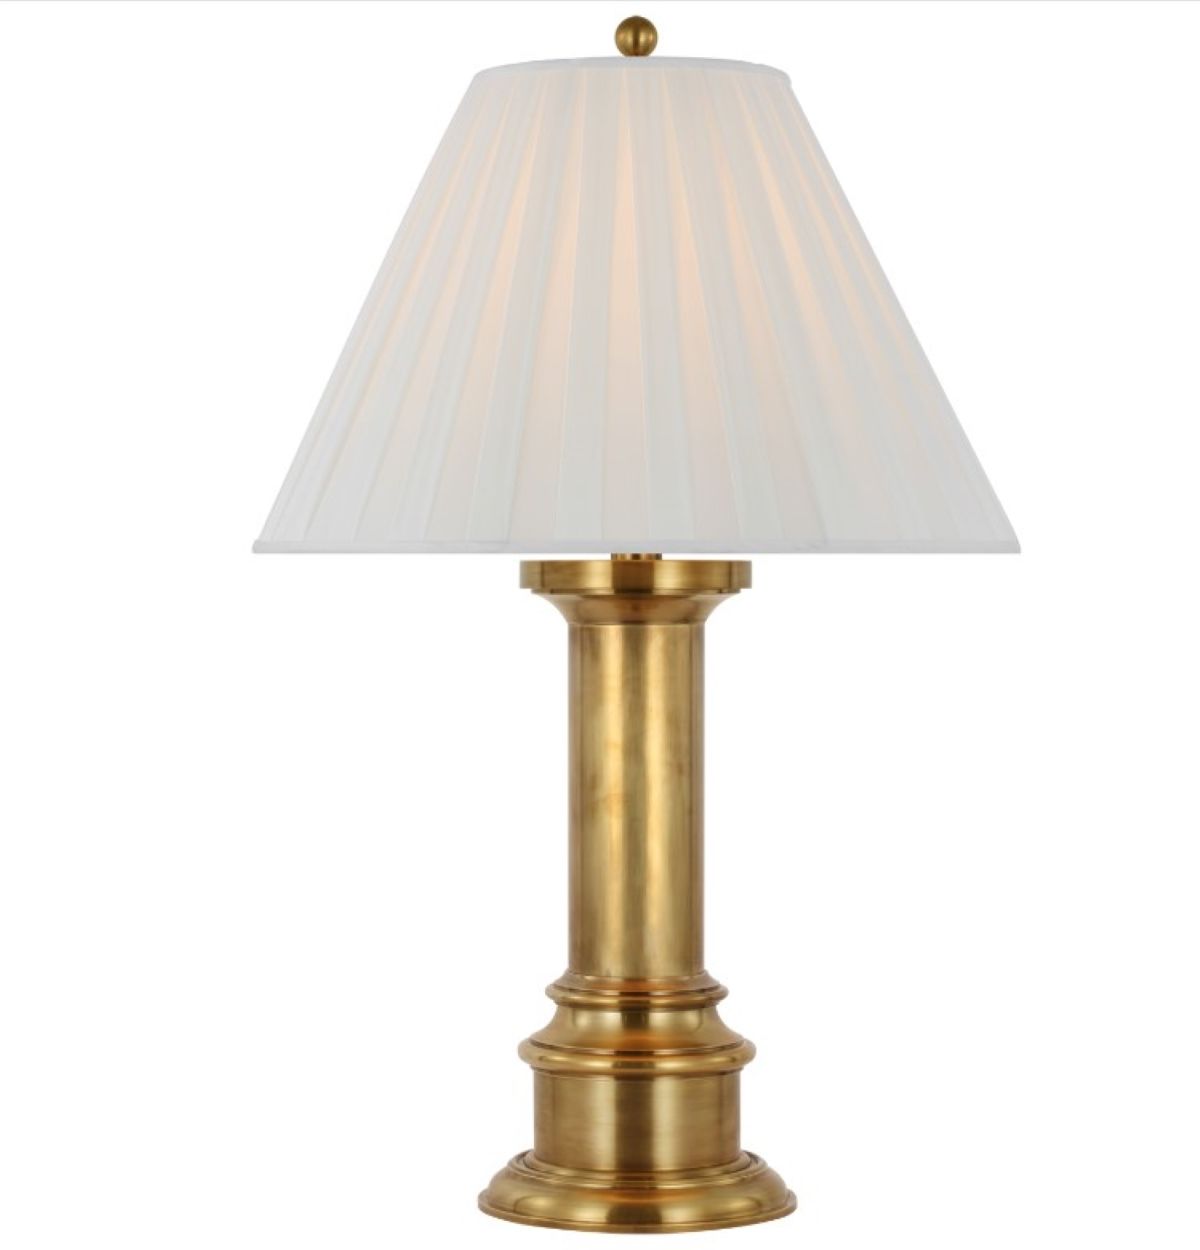 HAMMETT LARGE TABLE LAMP